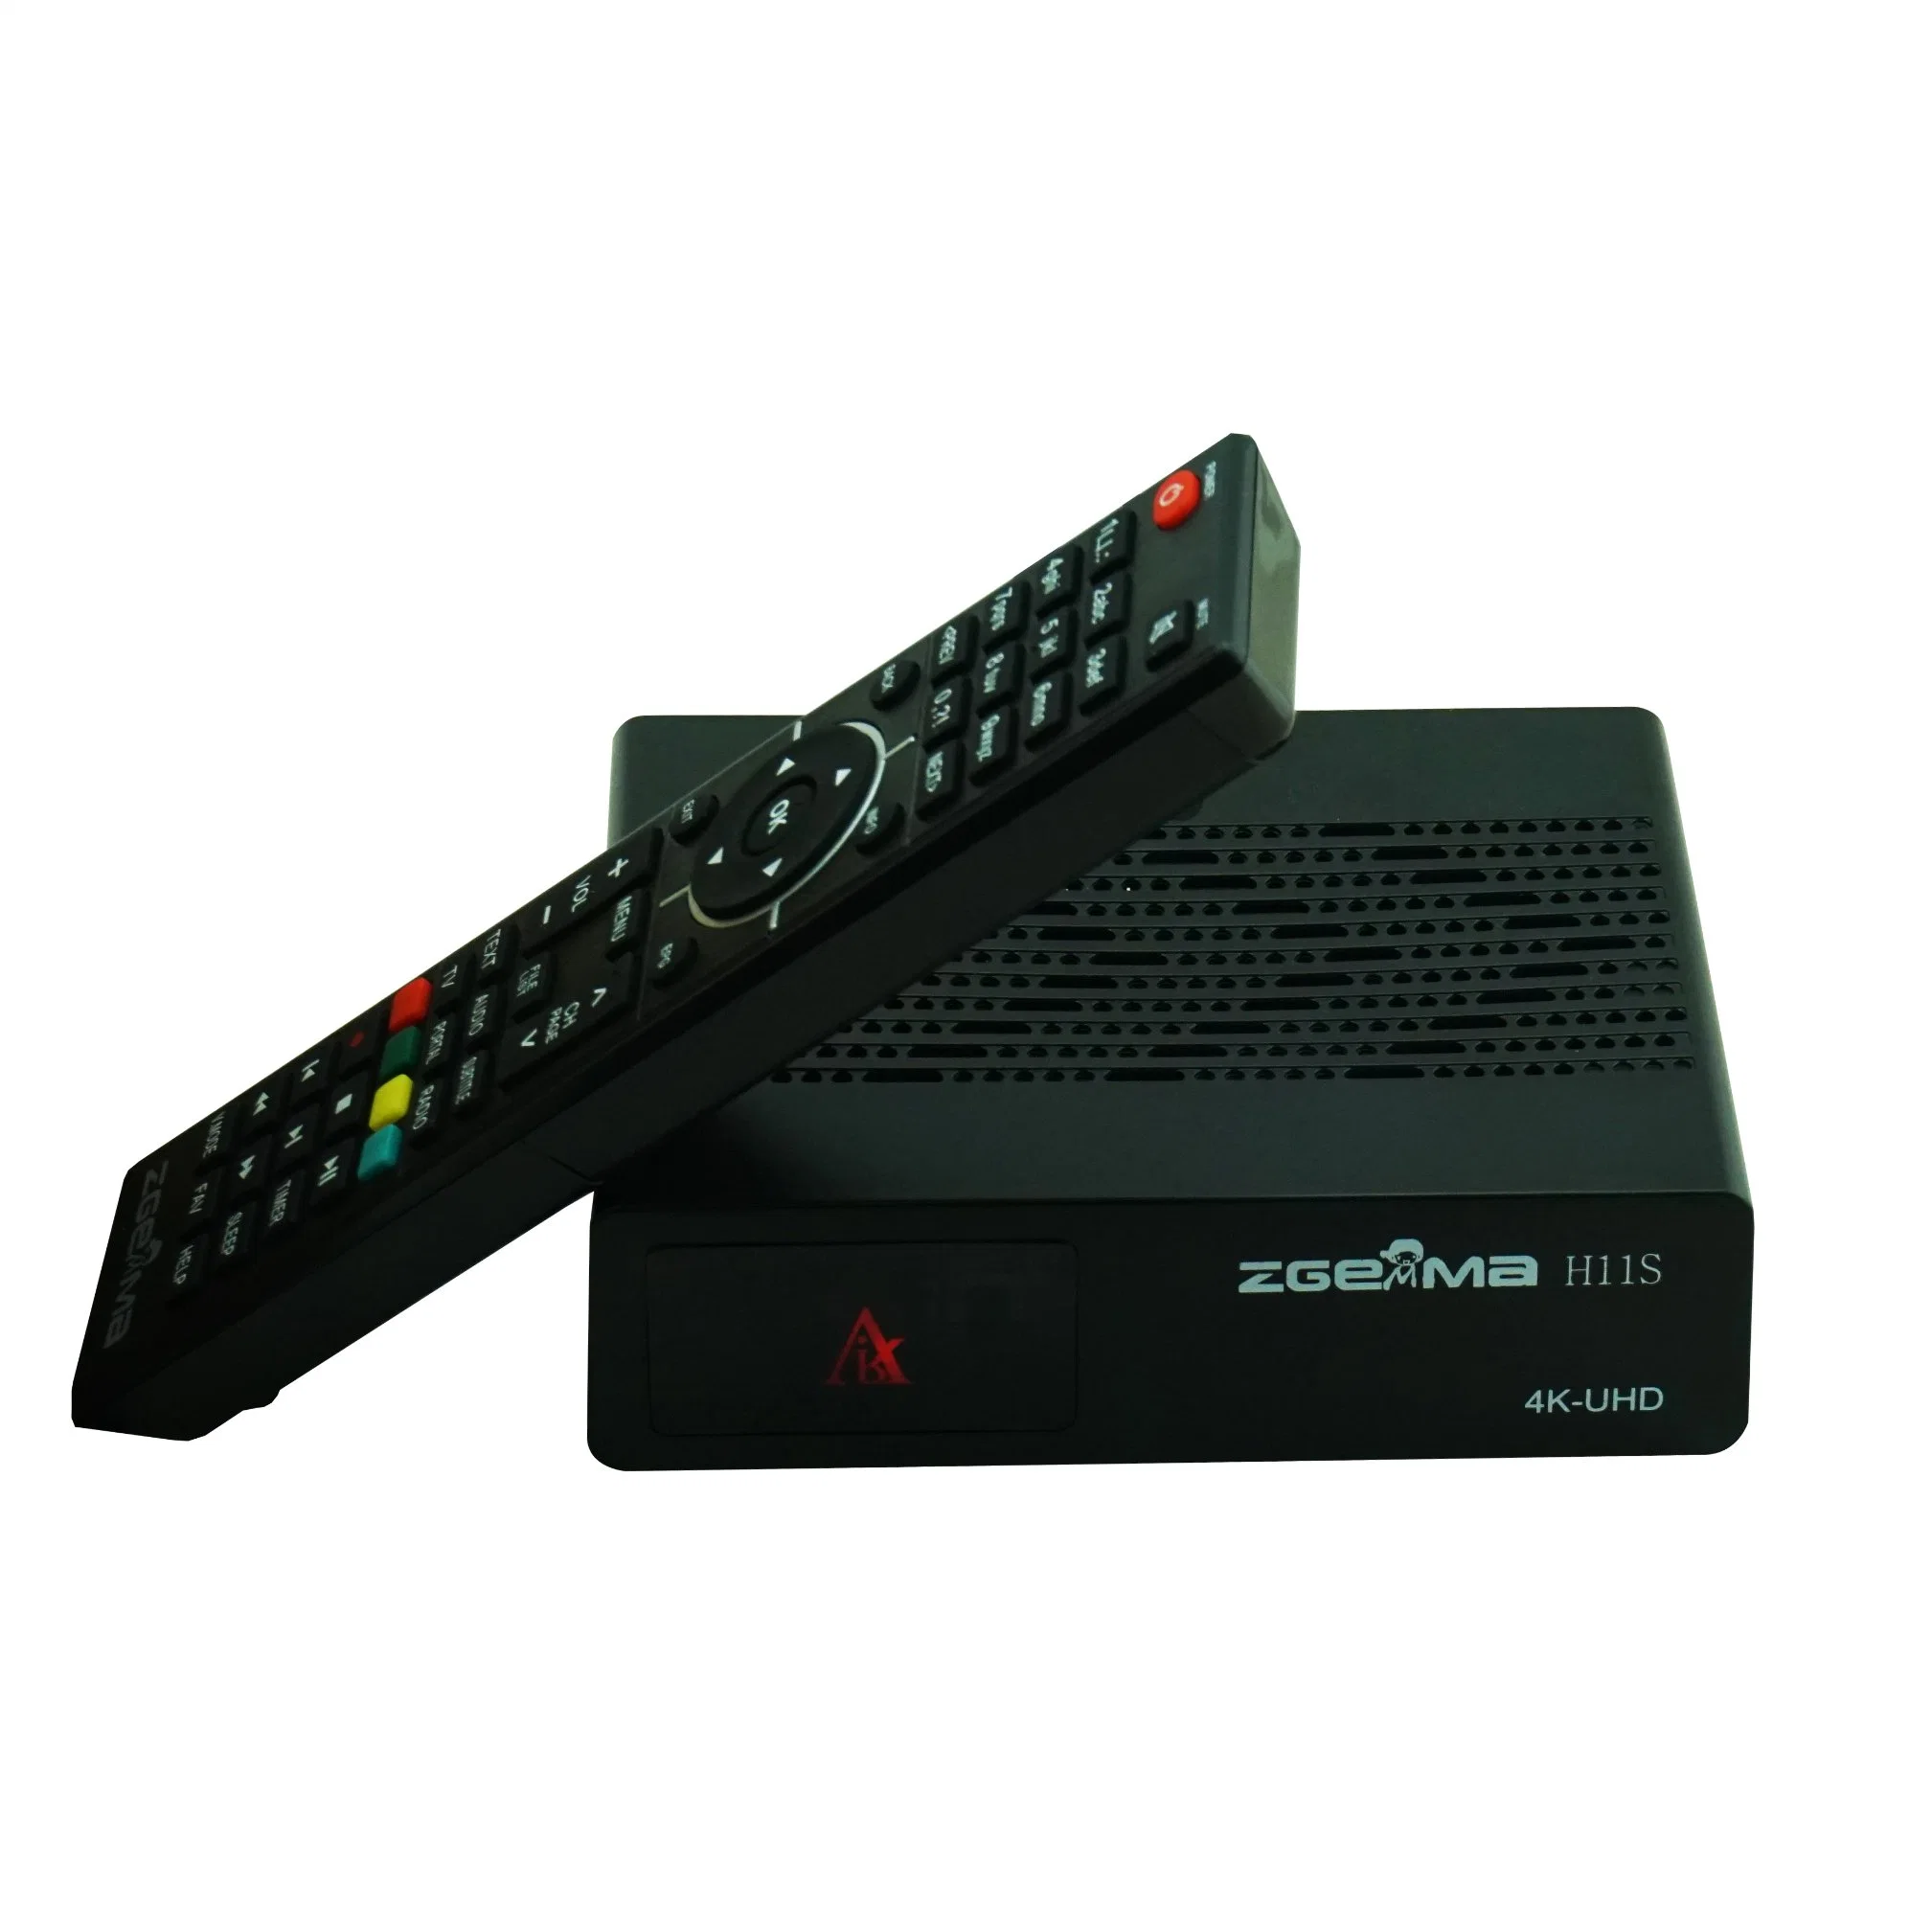 Receptor de satélite Zgemma H11s 4K UHD Linux DVB-S2X